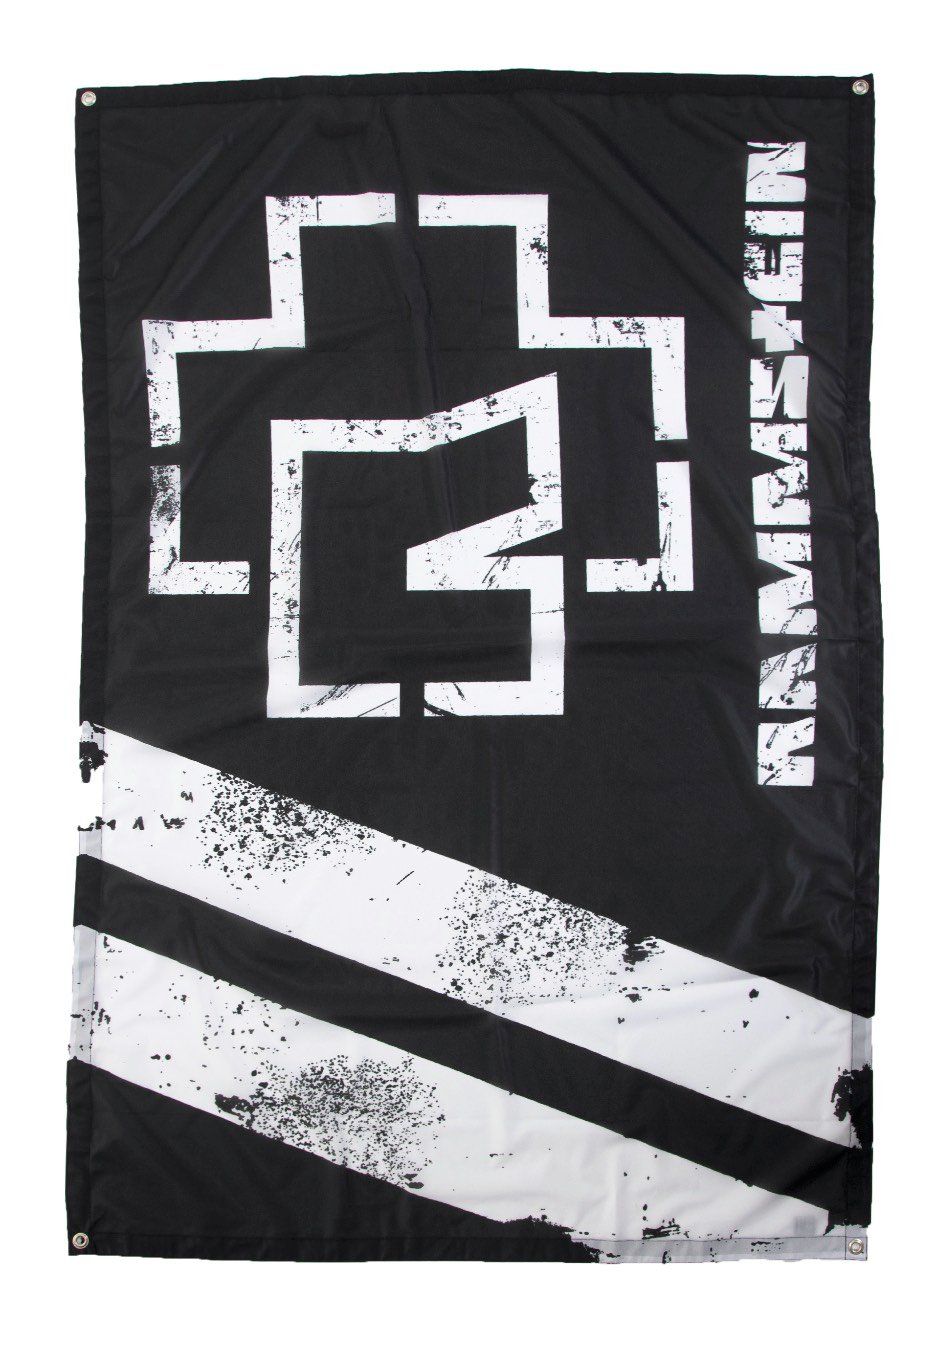 Rammstein - Logo - Flag